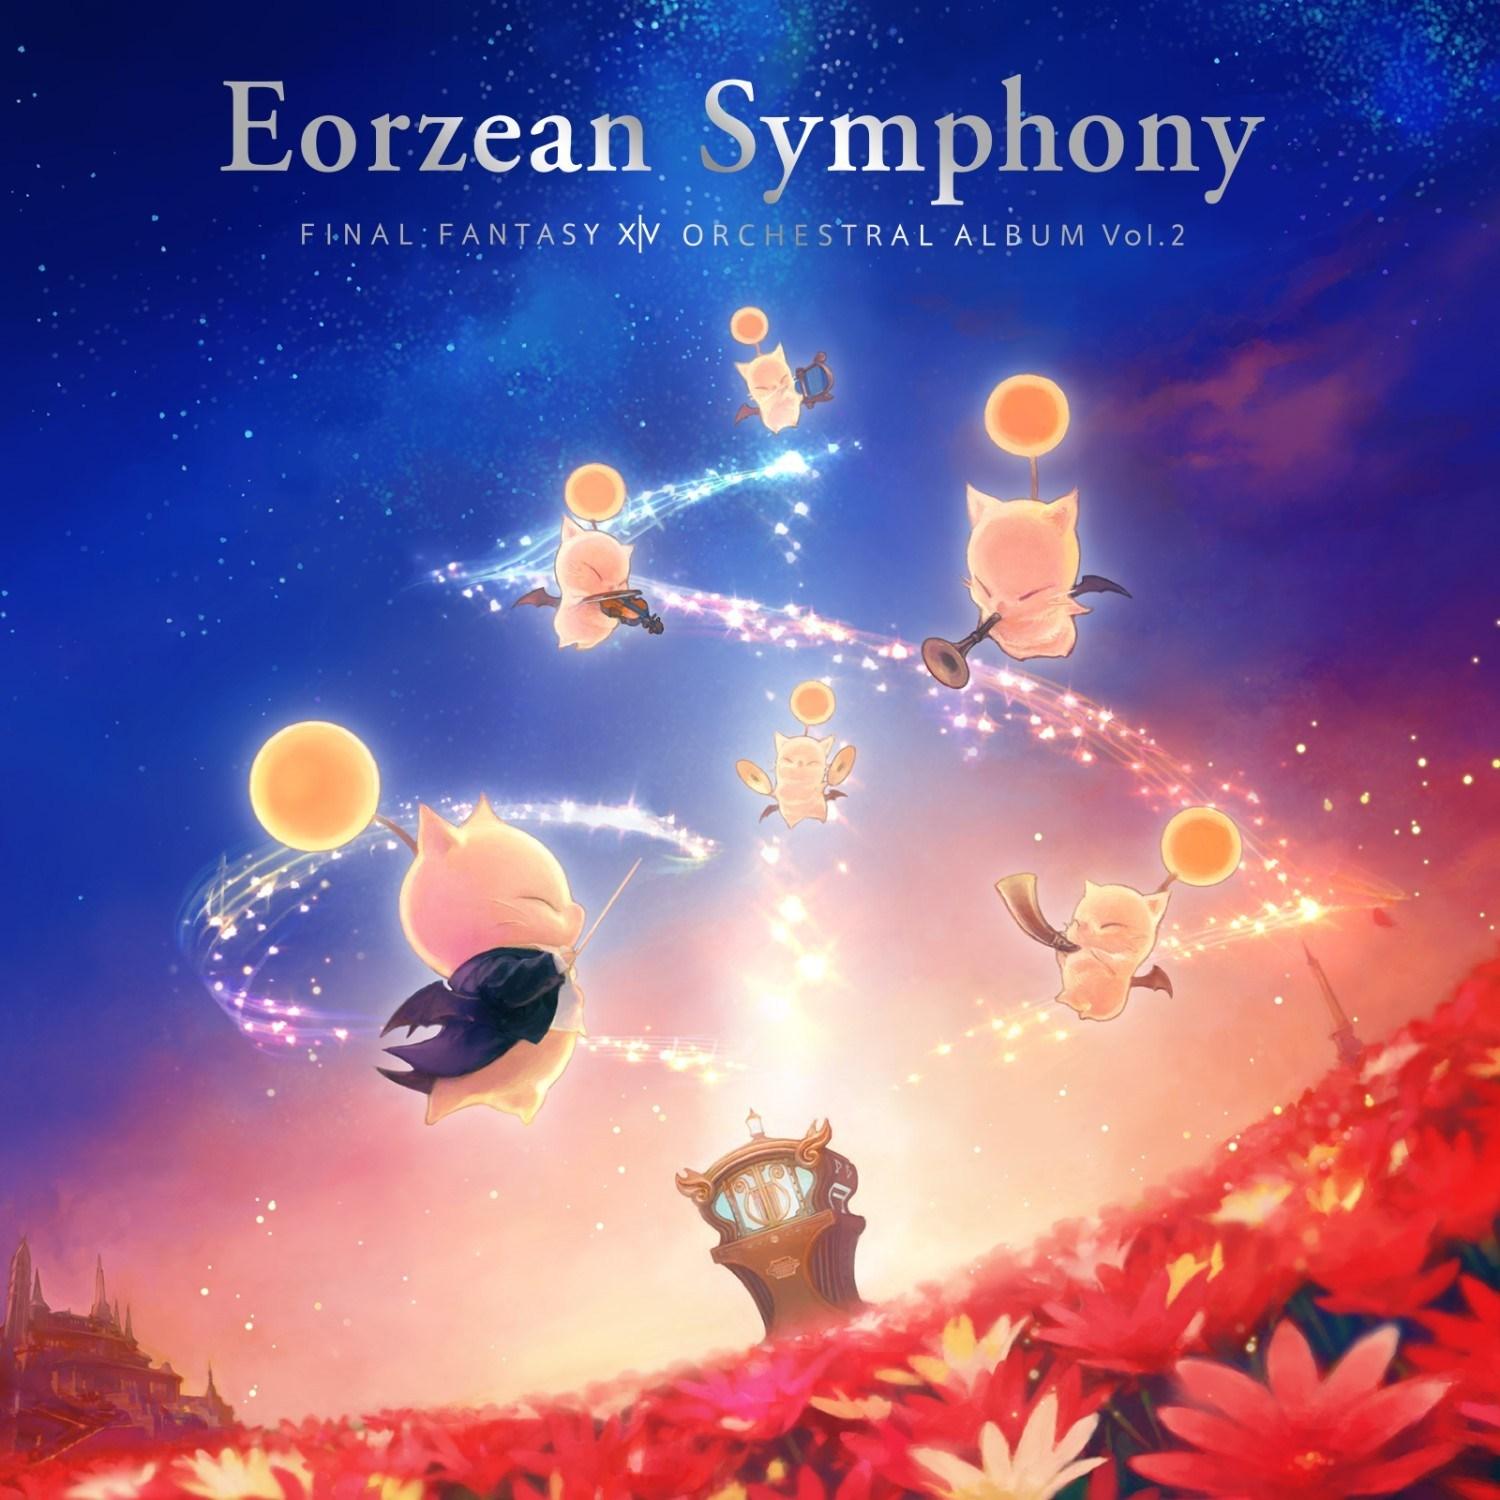 Eorzean Symphony: Final Fantasy XIV Orchestral Album Vol.2